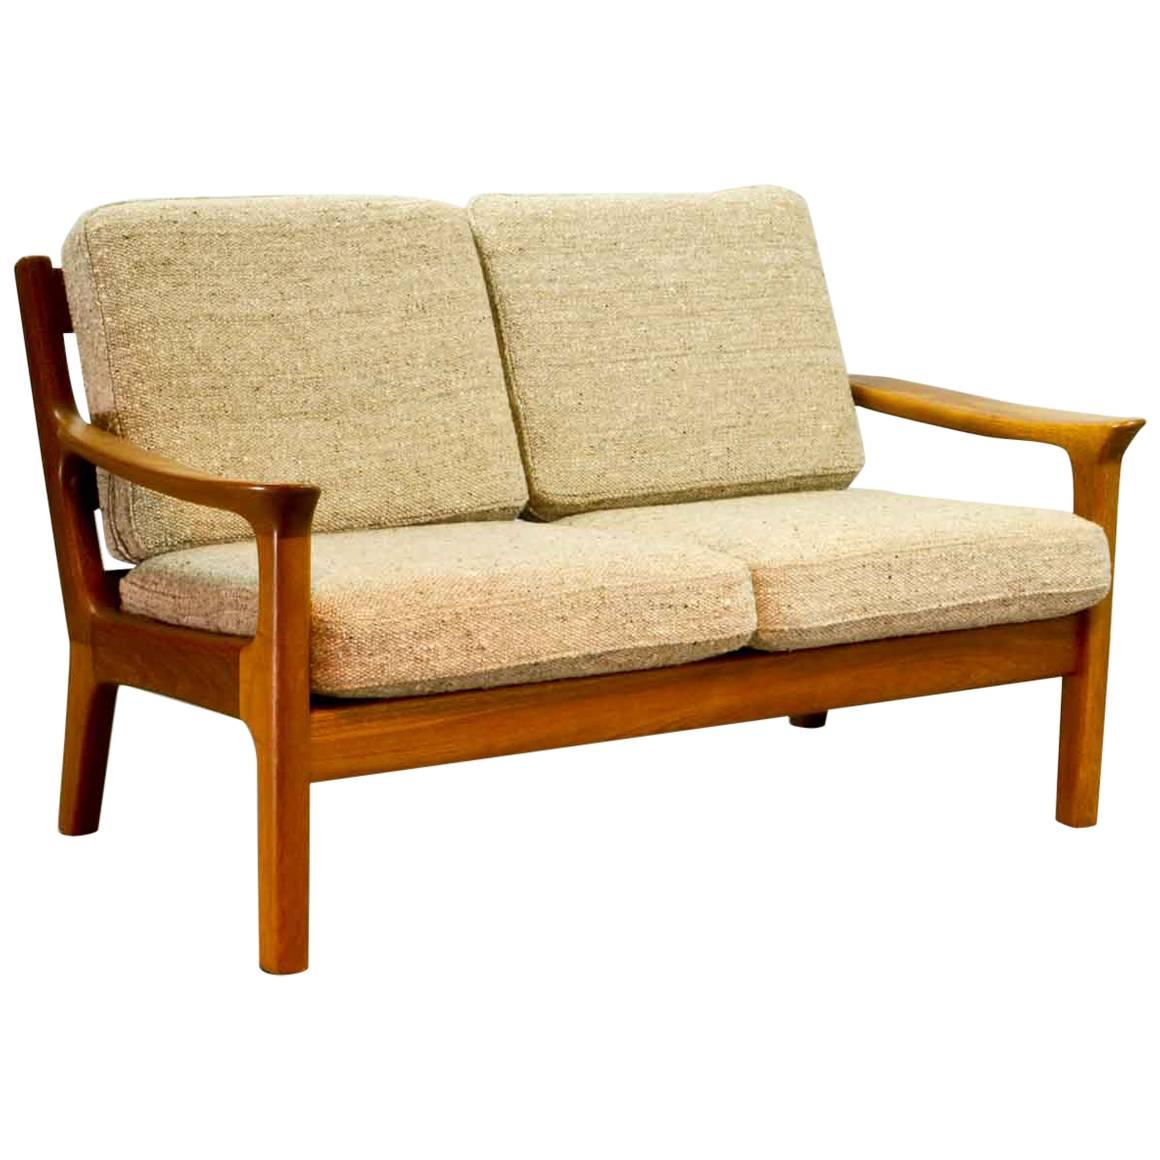 Midcentury Two-Seat Teak Sofa Designed by Juul Kristensen for Glostrup, 1960s